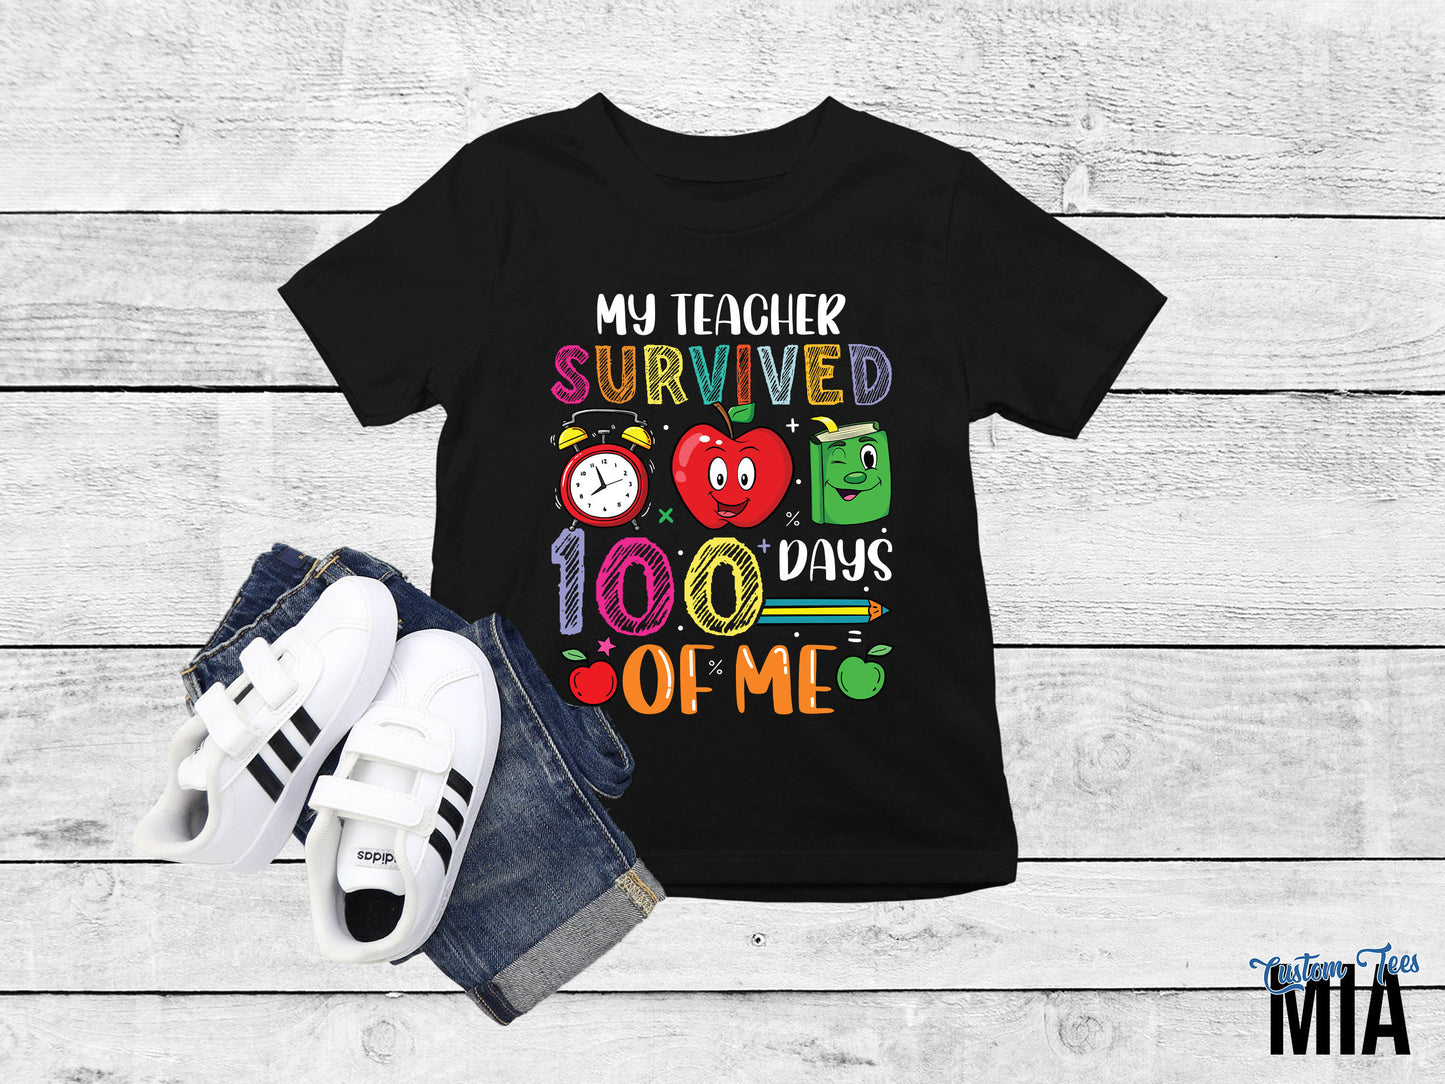 My Teacher Survived 100 Days of Me Shirt